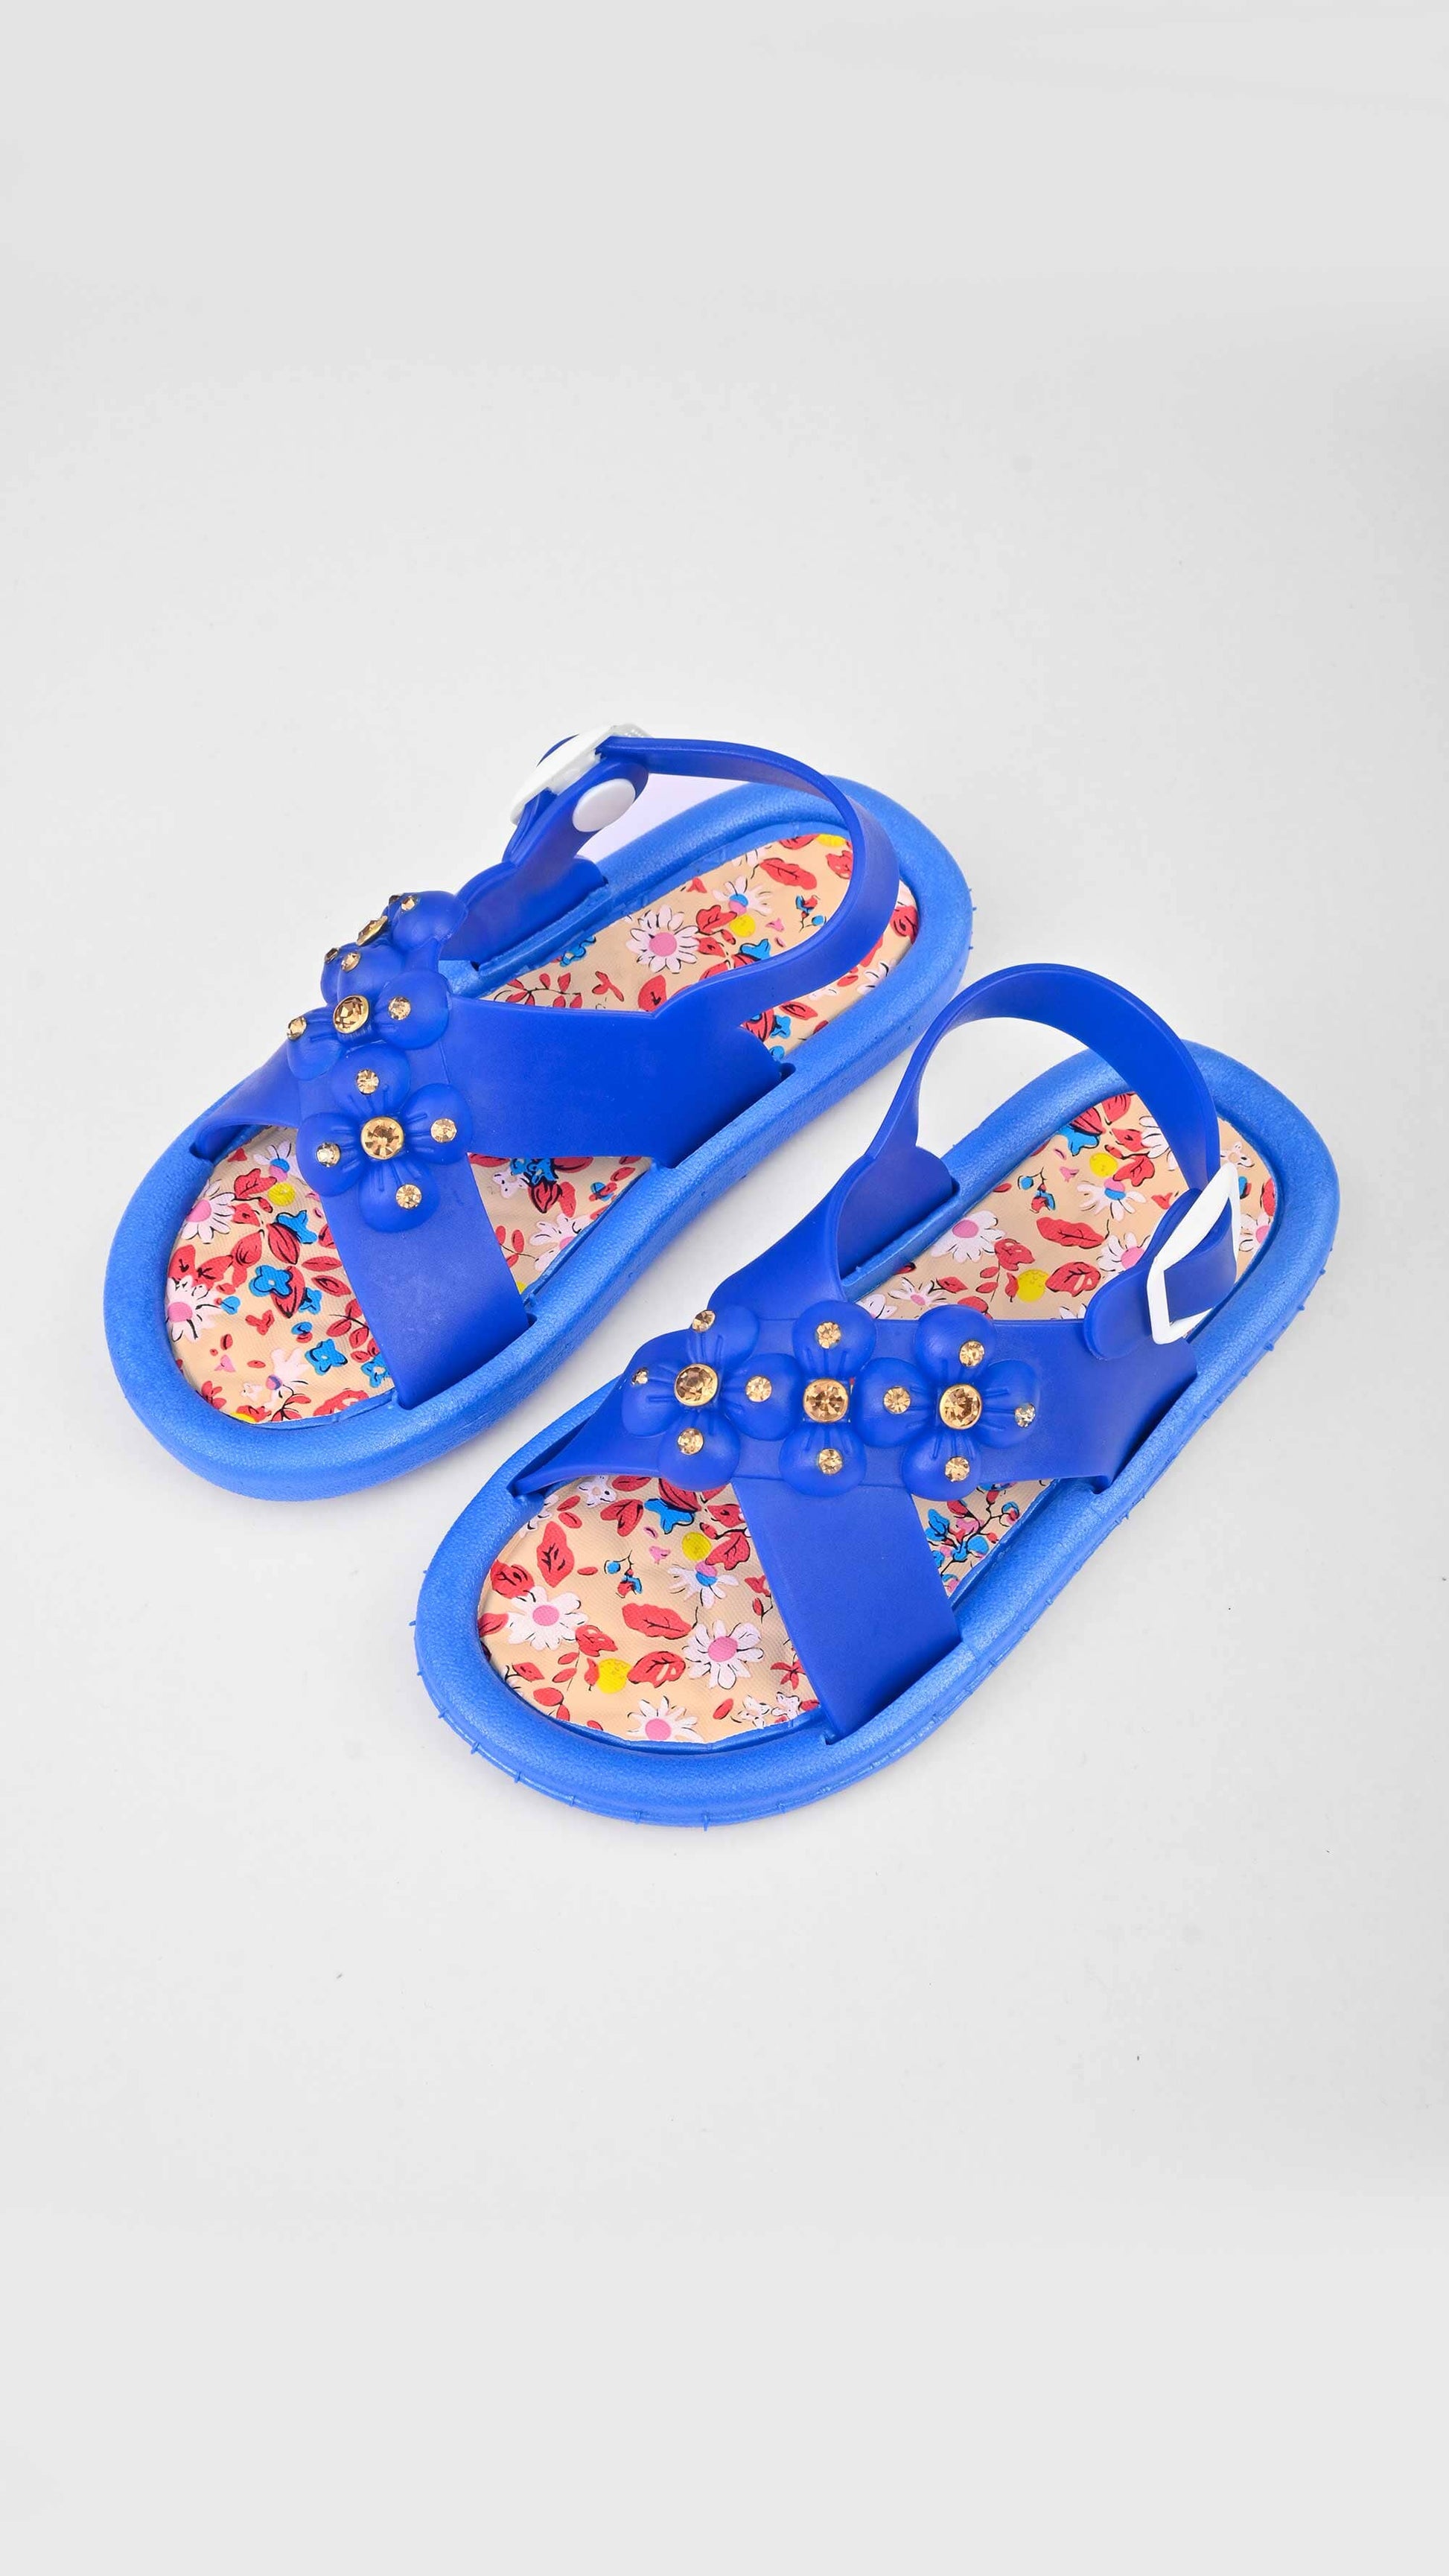 Seven Eleven Girl's Cross Over Style Comfort Sandals Girl's Shoes RAM 